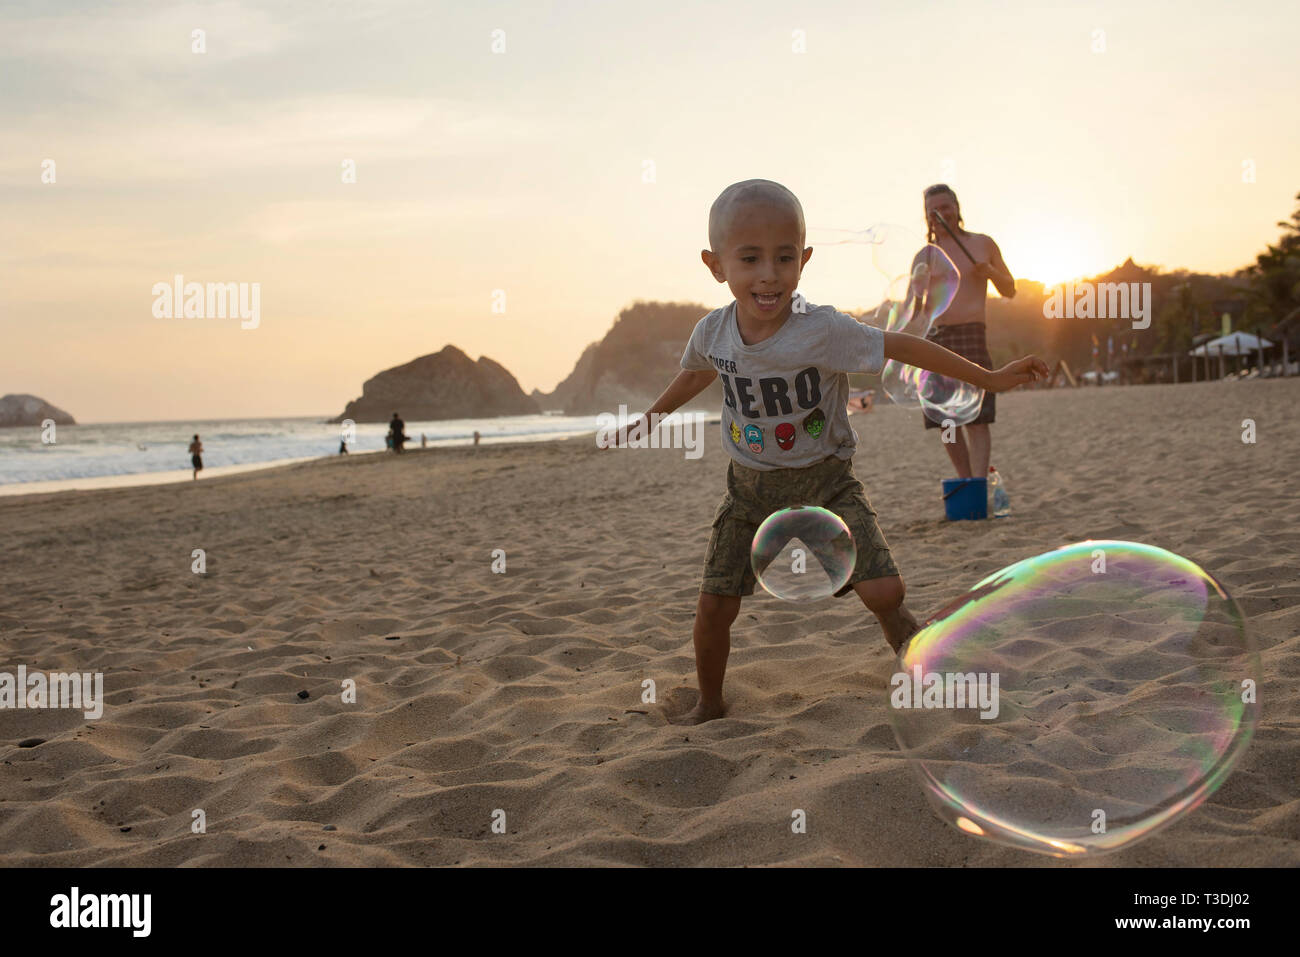 Local boy chasing bubbles. Zipolite Beach, Oaxaca State, Mexico. Apr 2019 Stock Photo